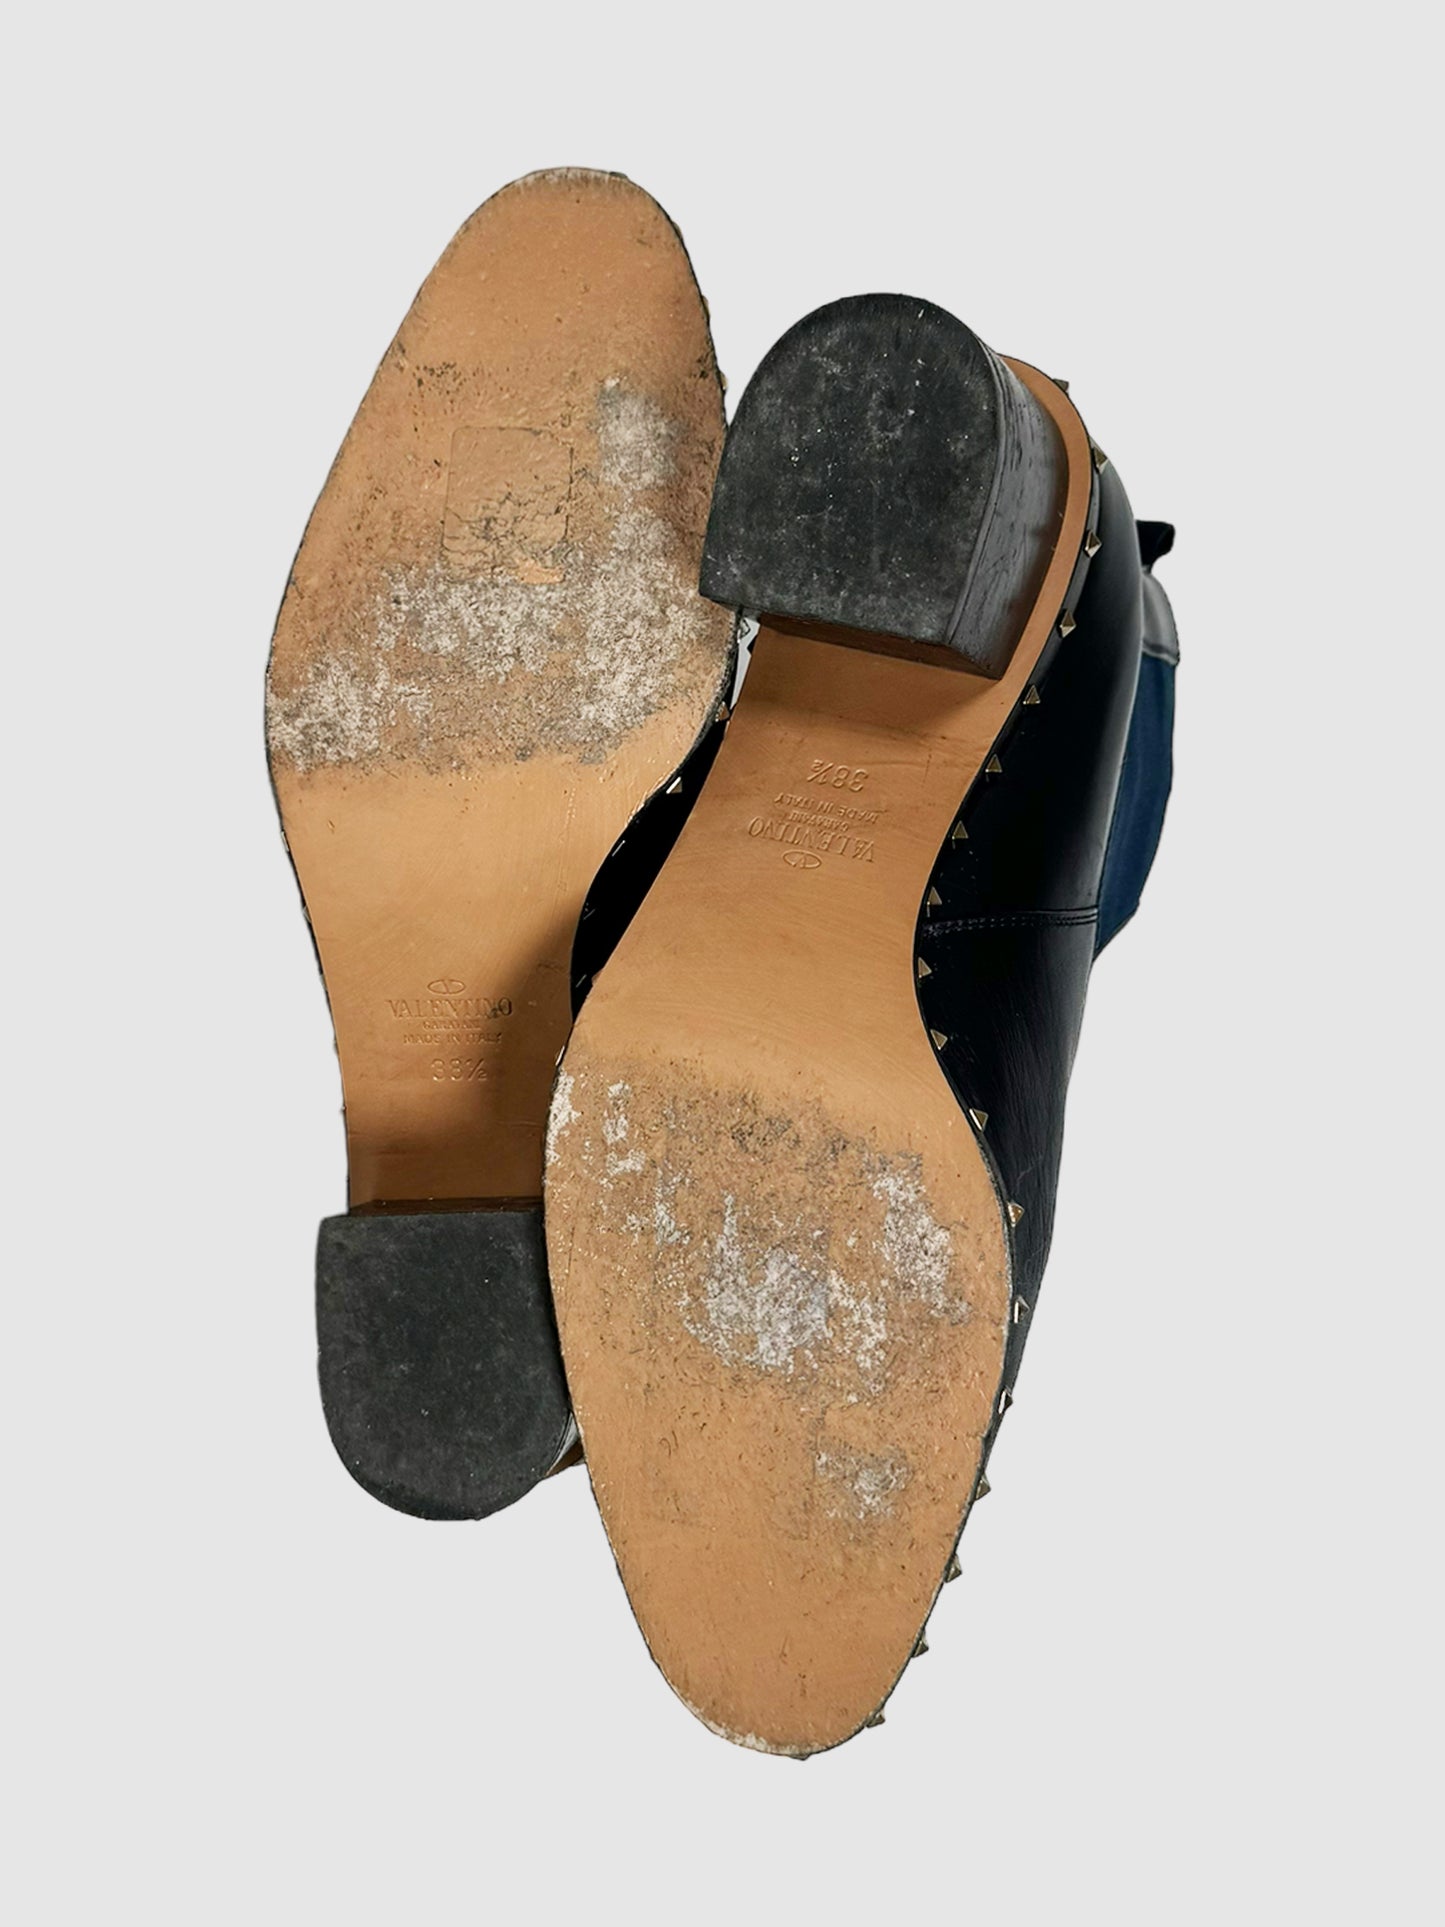 Valentino Garavani Rockstud Boots - Size 38.5